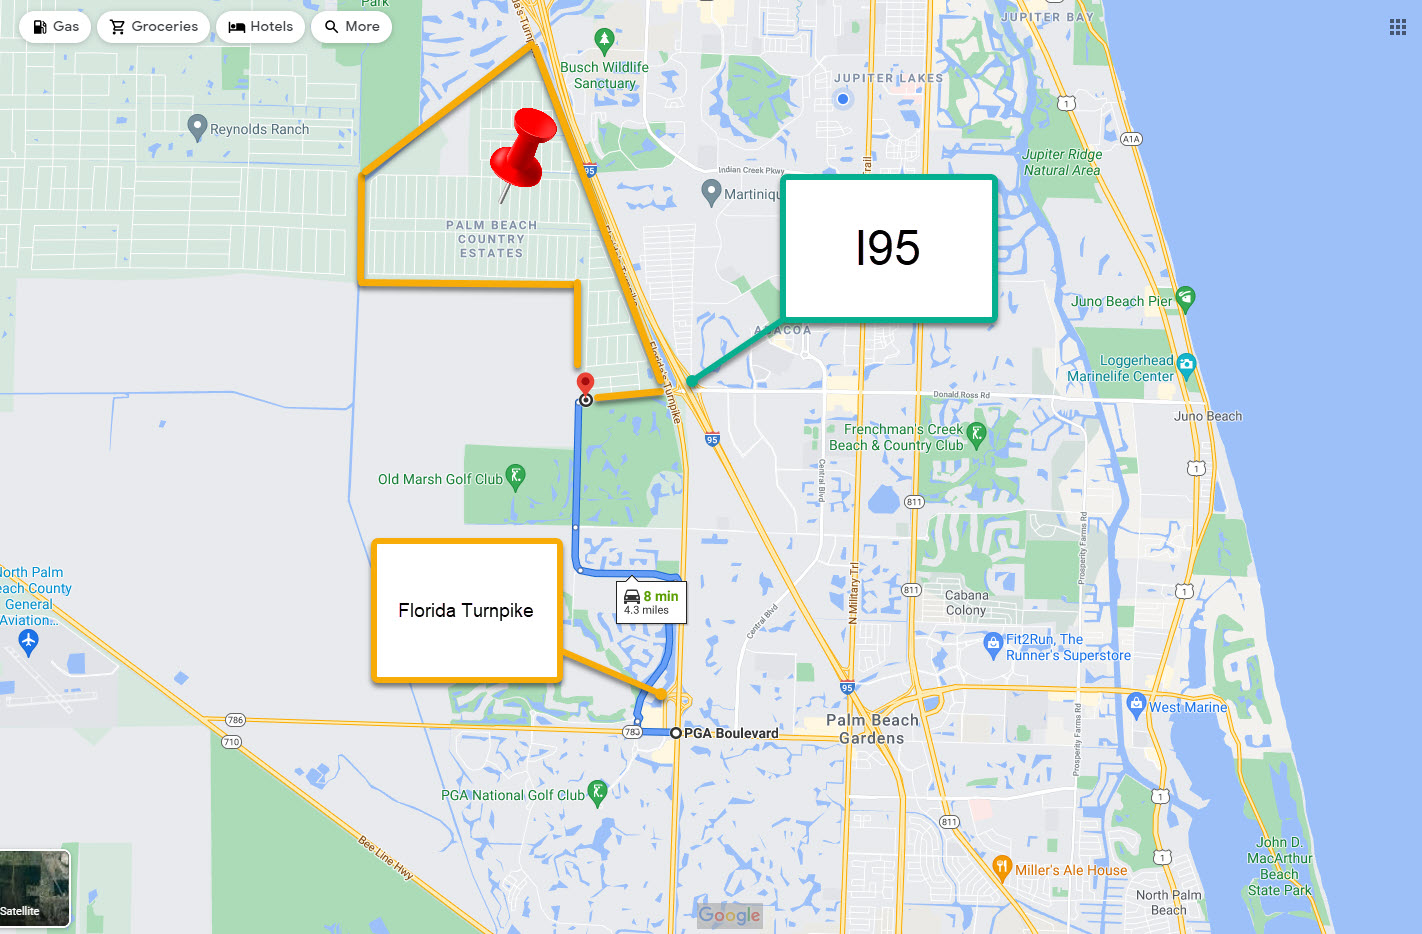 Map Location of Palm Beach Country Estates neighborhood located in Palm Beach Gardens, Fl